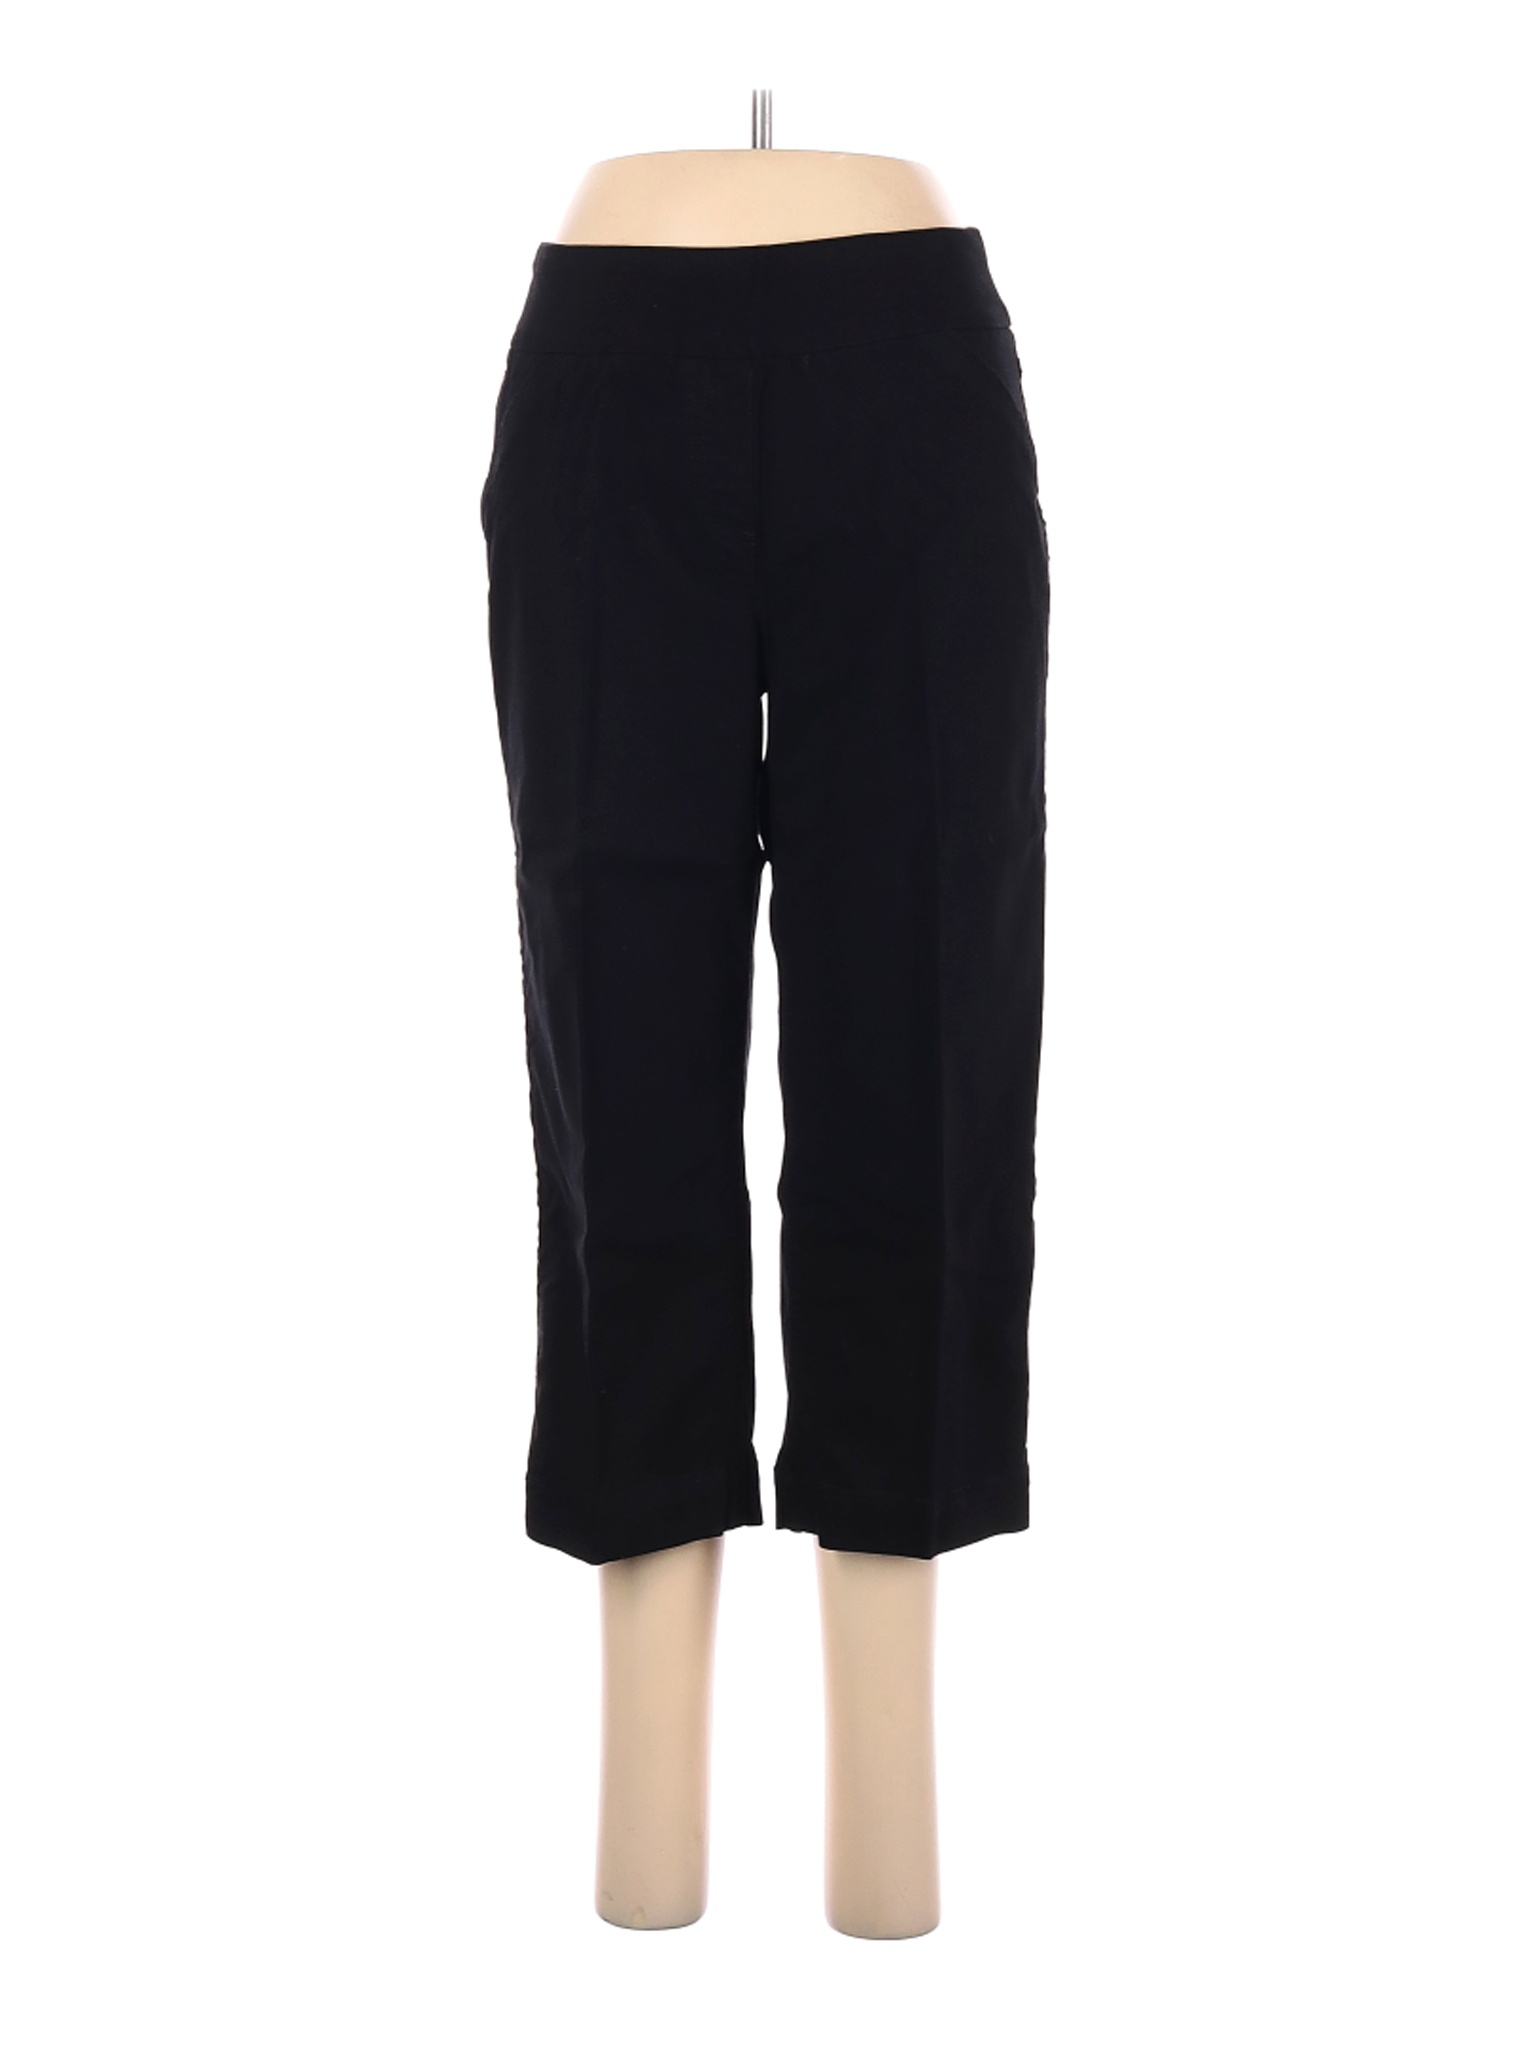 Westbound Women Black Casual Pants 8 | eBay